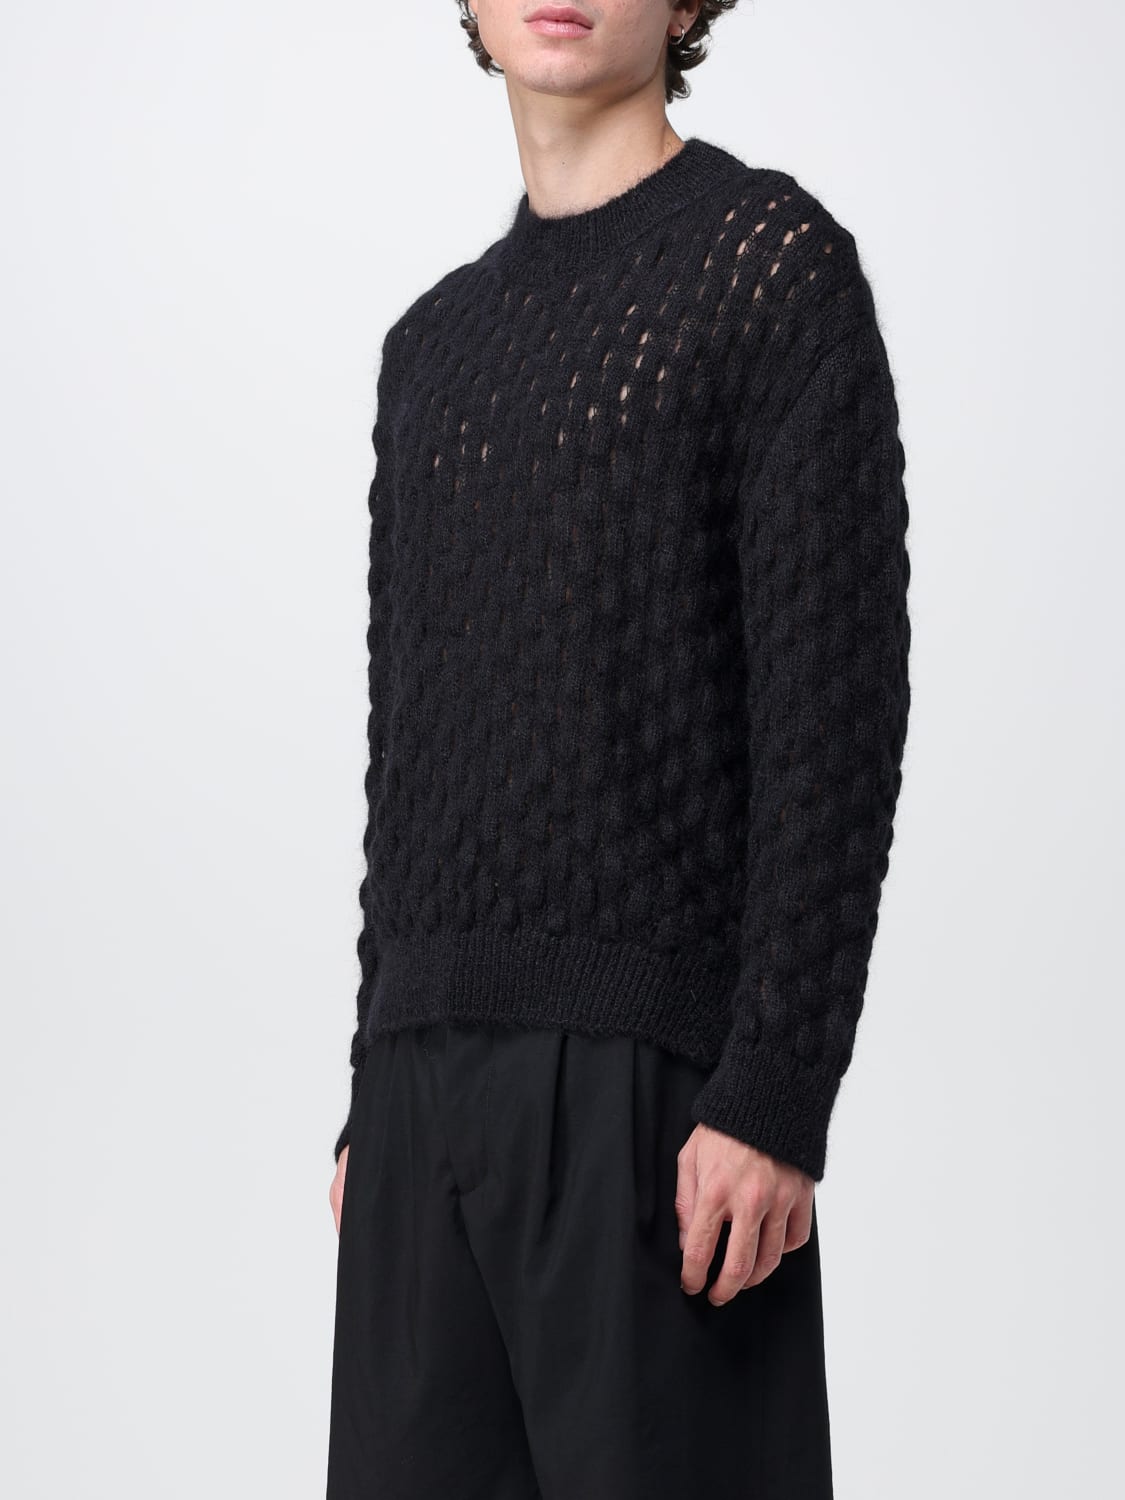 Simone Rocha Oversized Printed Cotton-Blend Jersey Hoodie - Men - Black Sweats - S